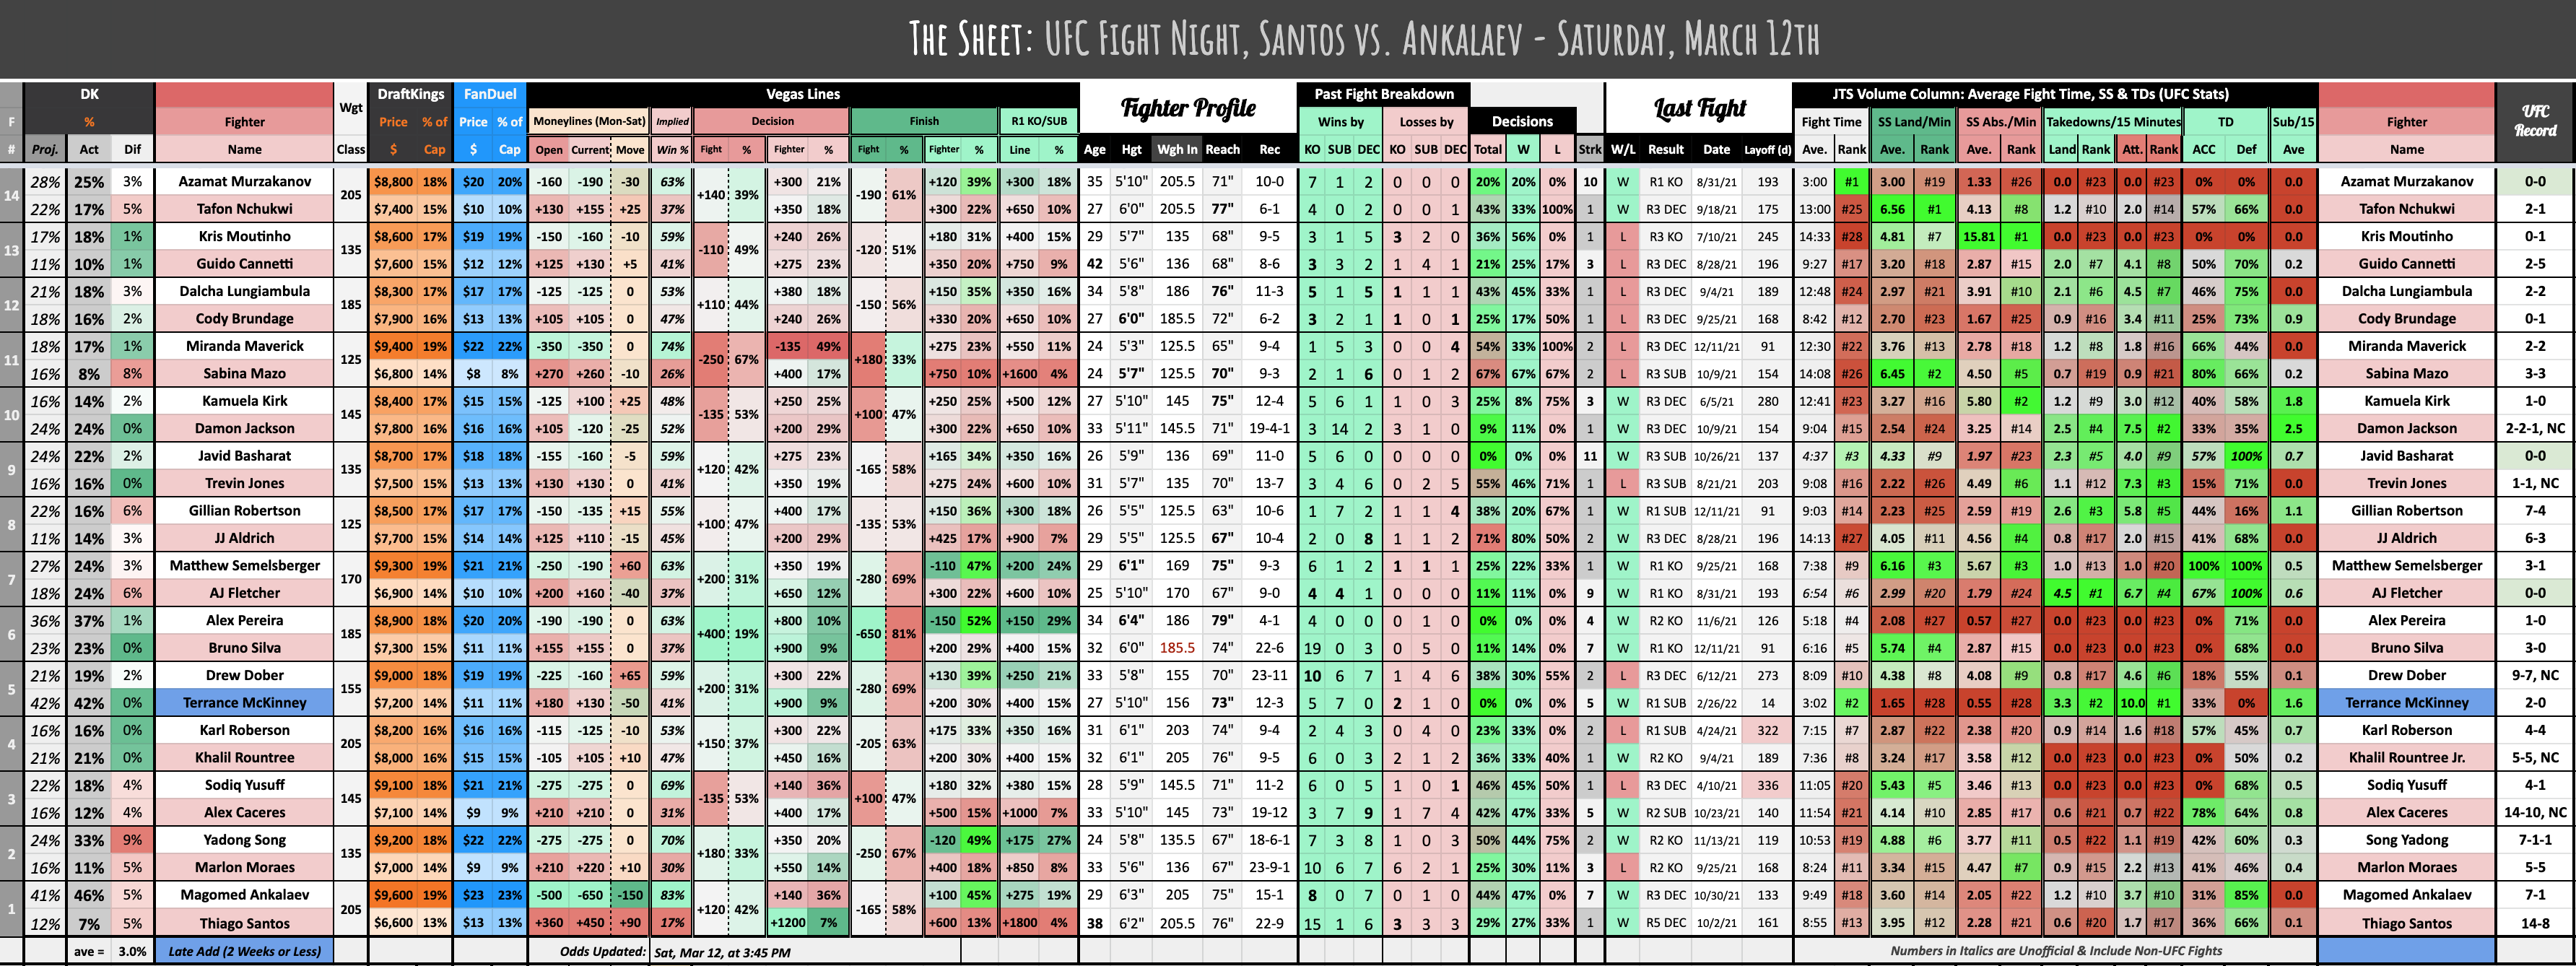 UFC Fight Night, Santos vs. Ankalaev - Saturday, March 12th